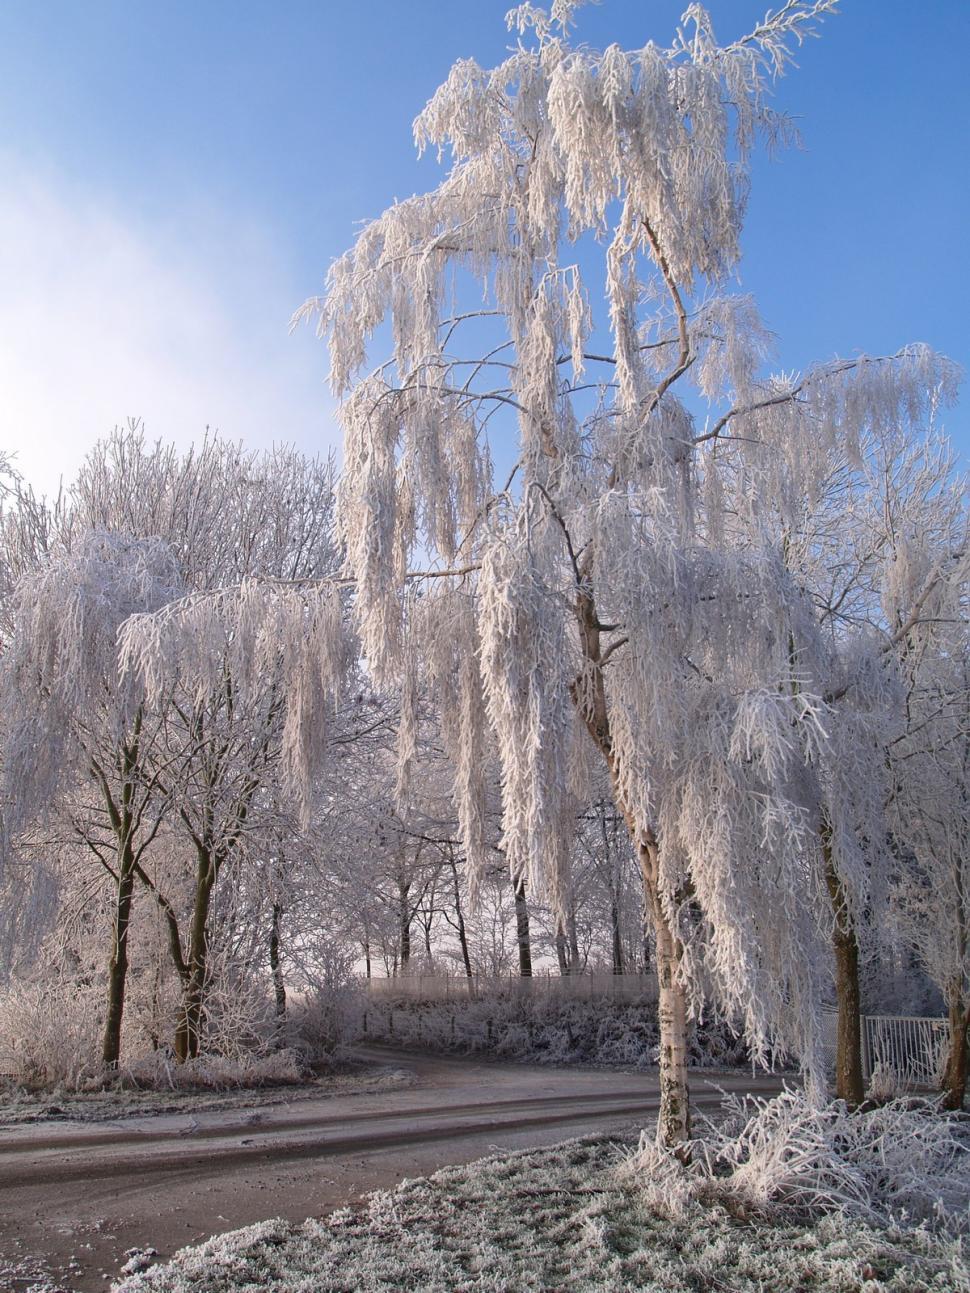 Free Image of Ice-Covered Tree Alongside Road 